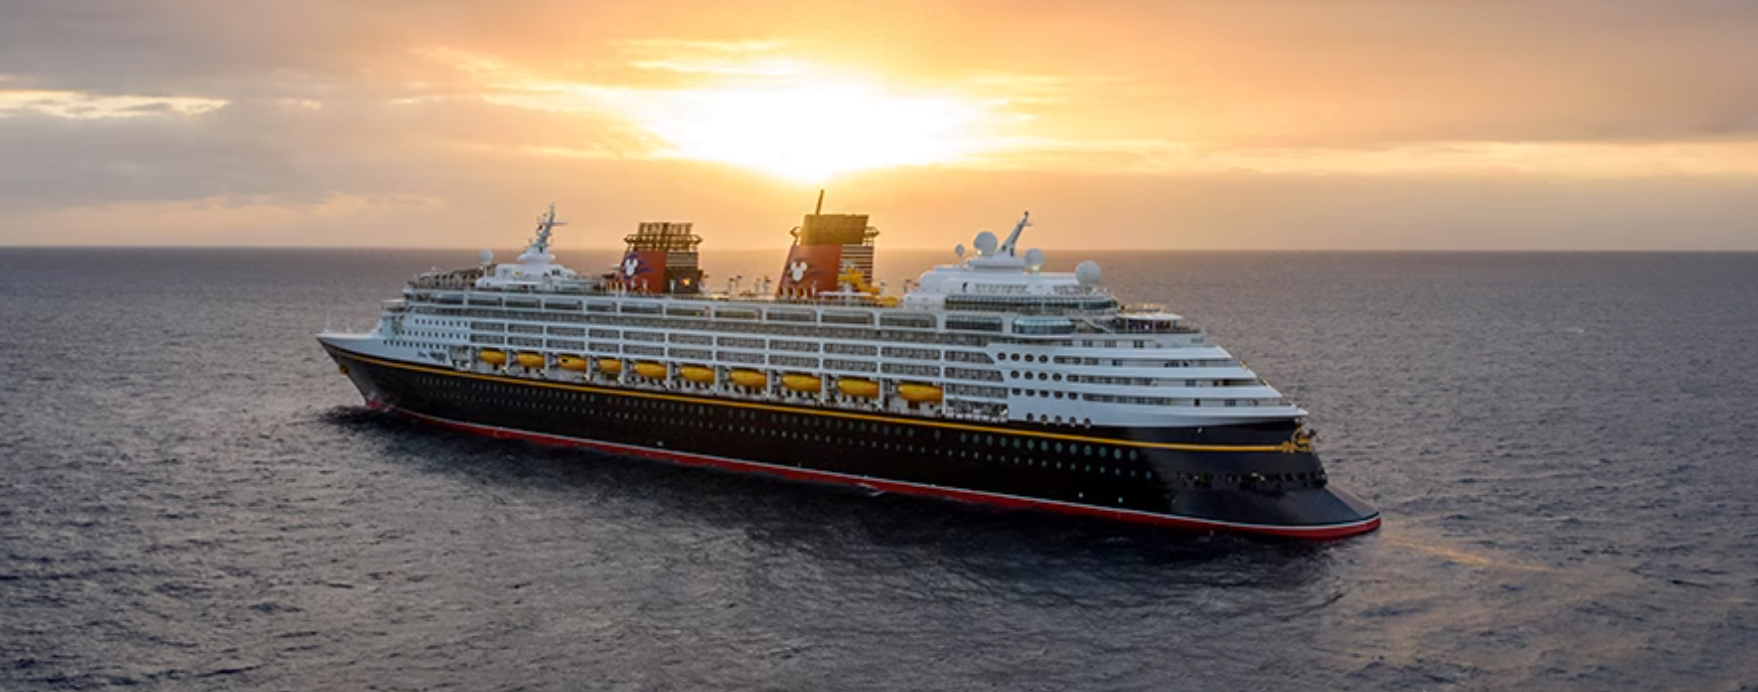 Disney Cruise Line tornerà sull’isola di Catalina